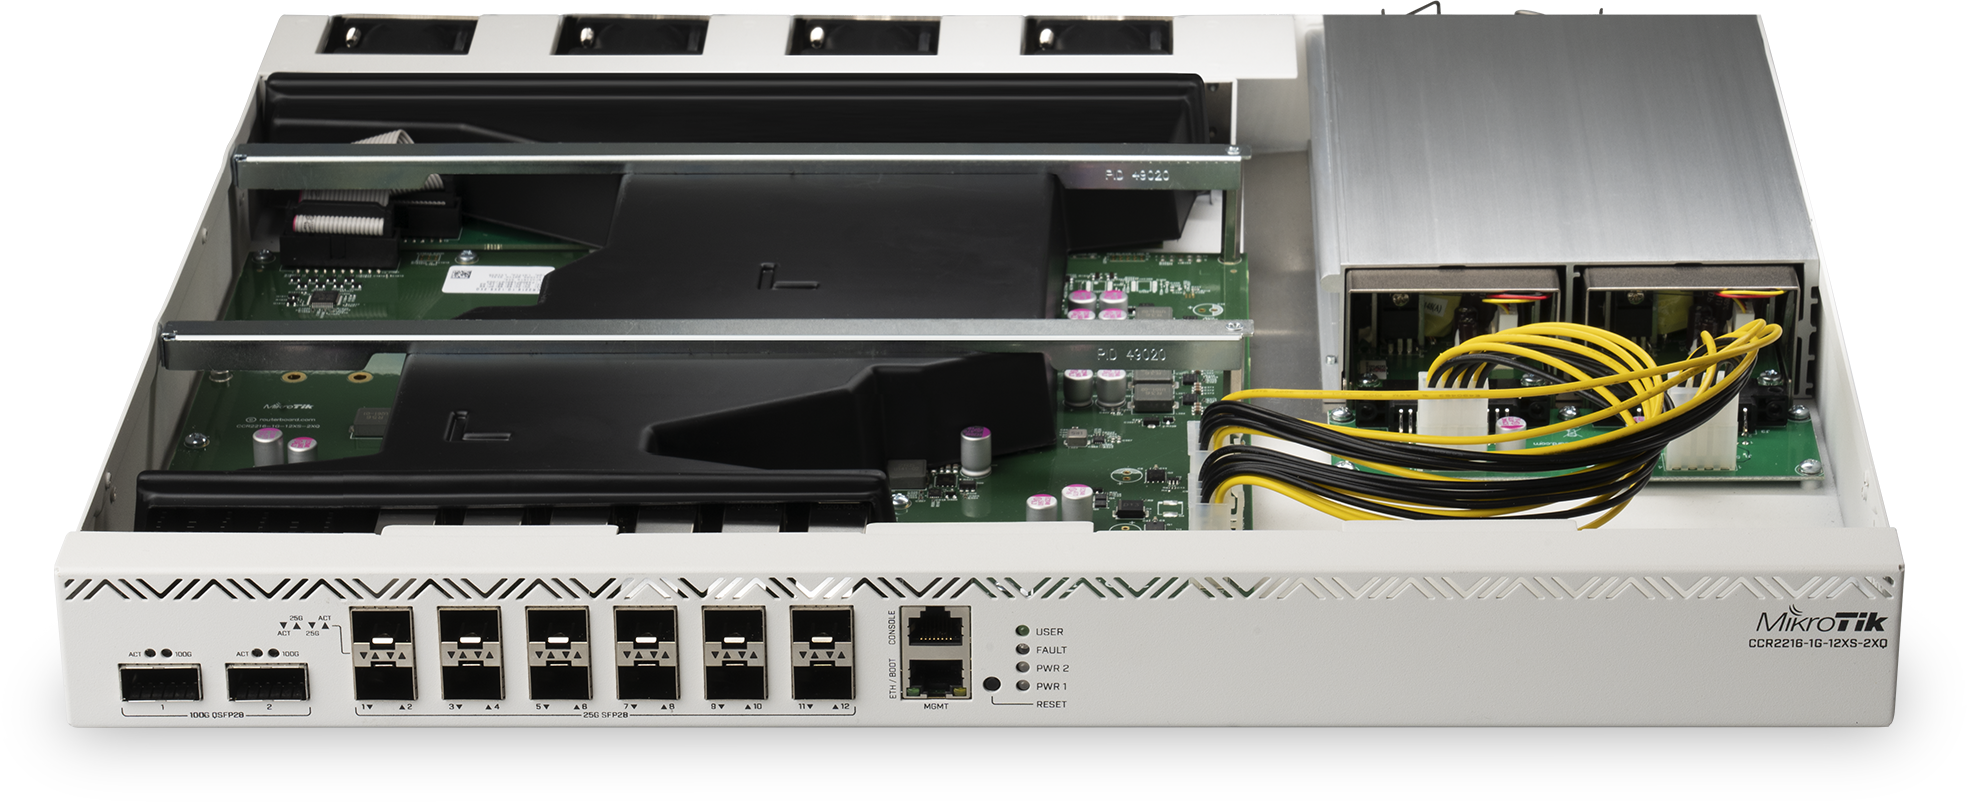 CCR2216-1G-12XS-2XQ 100Gb Router